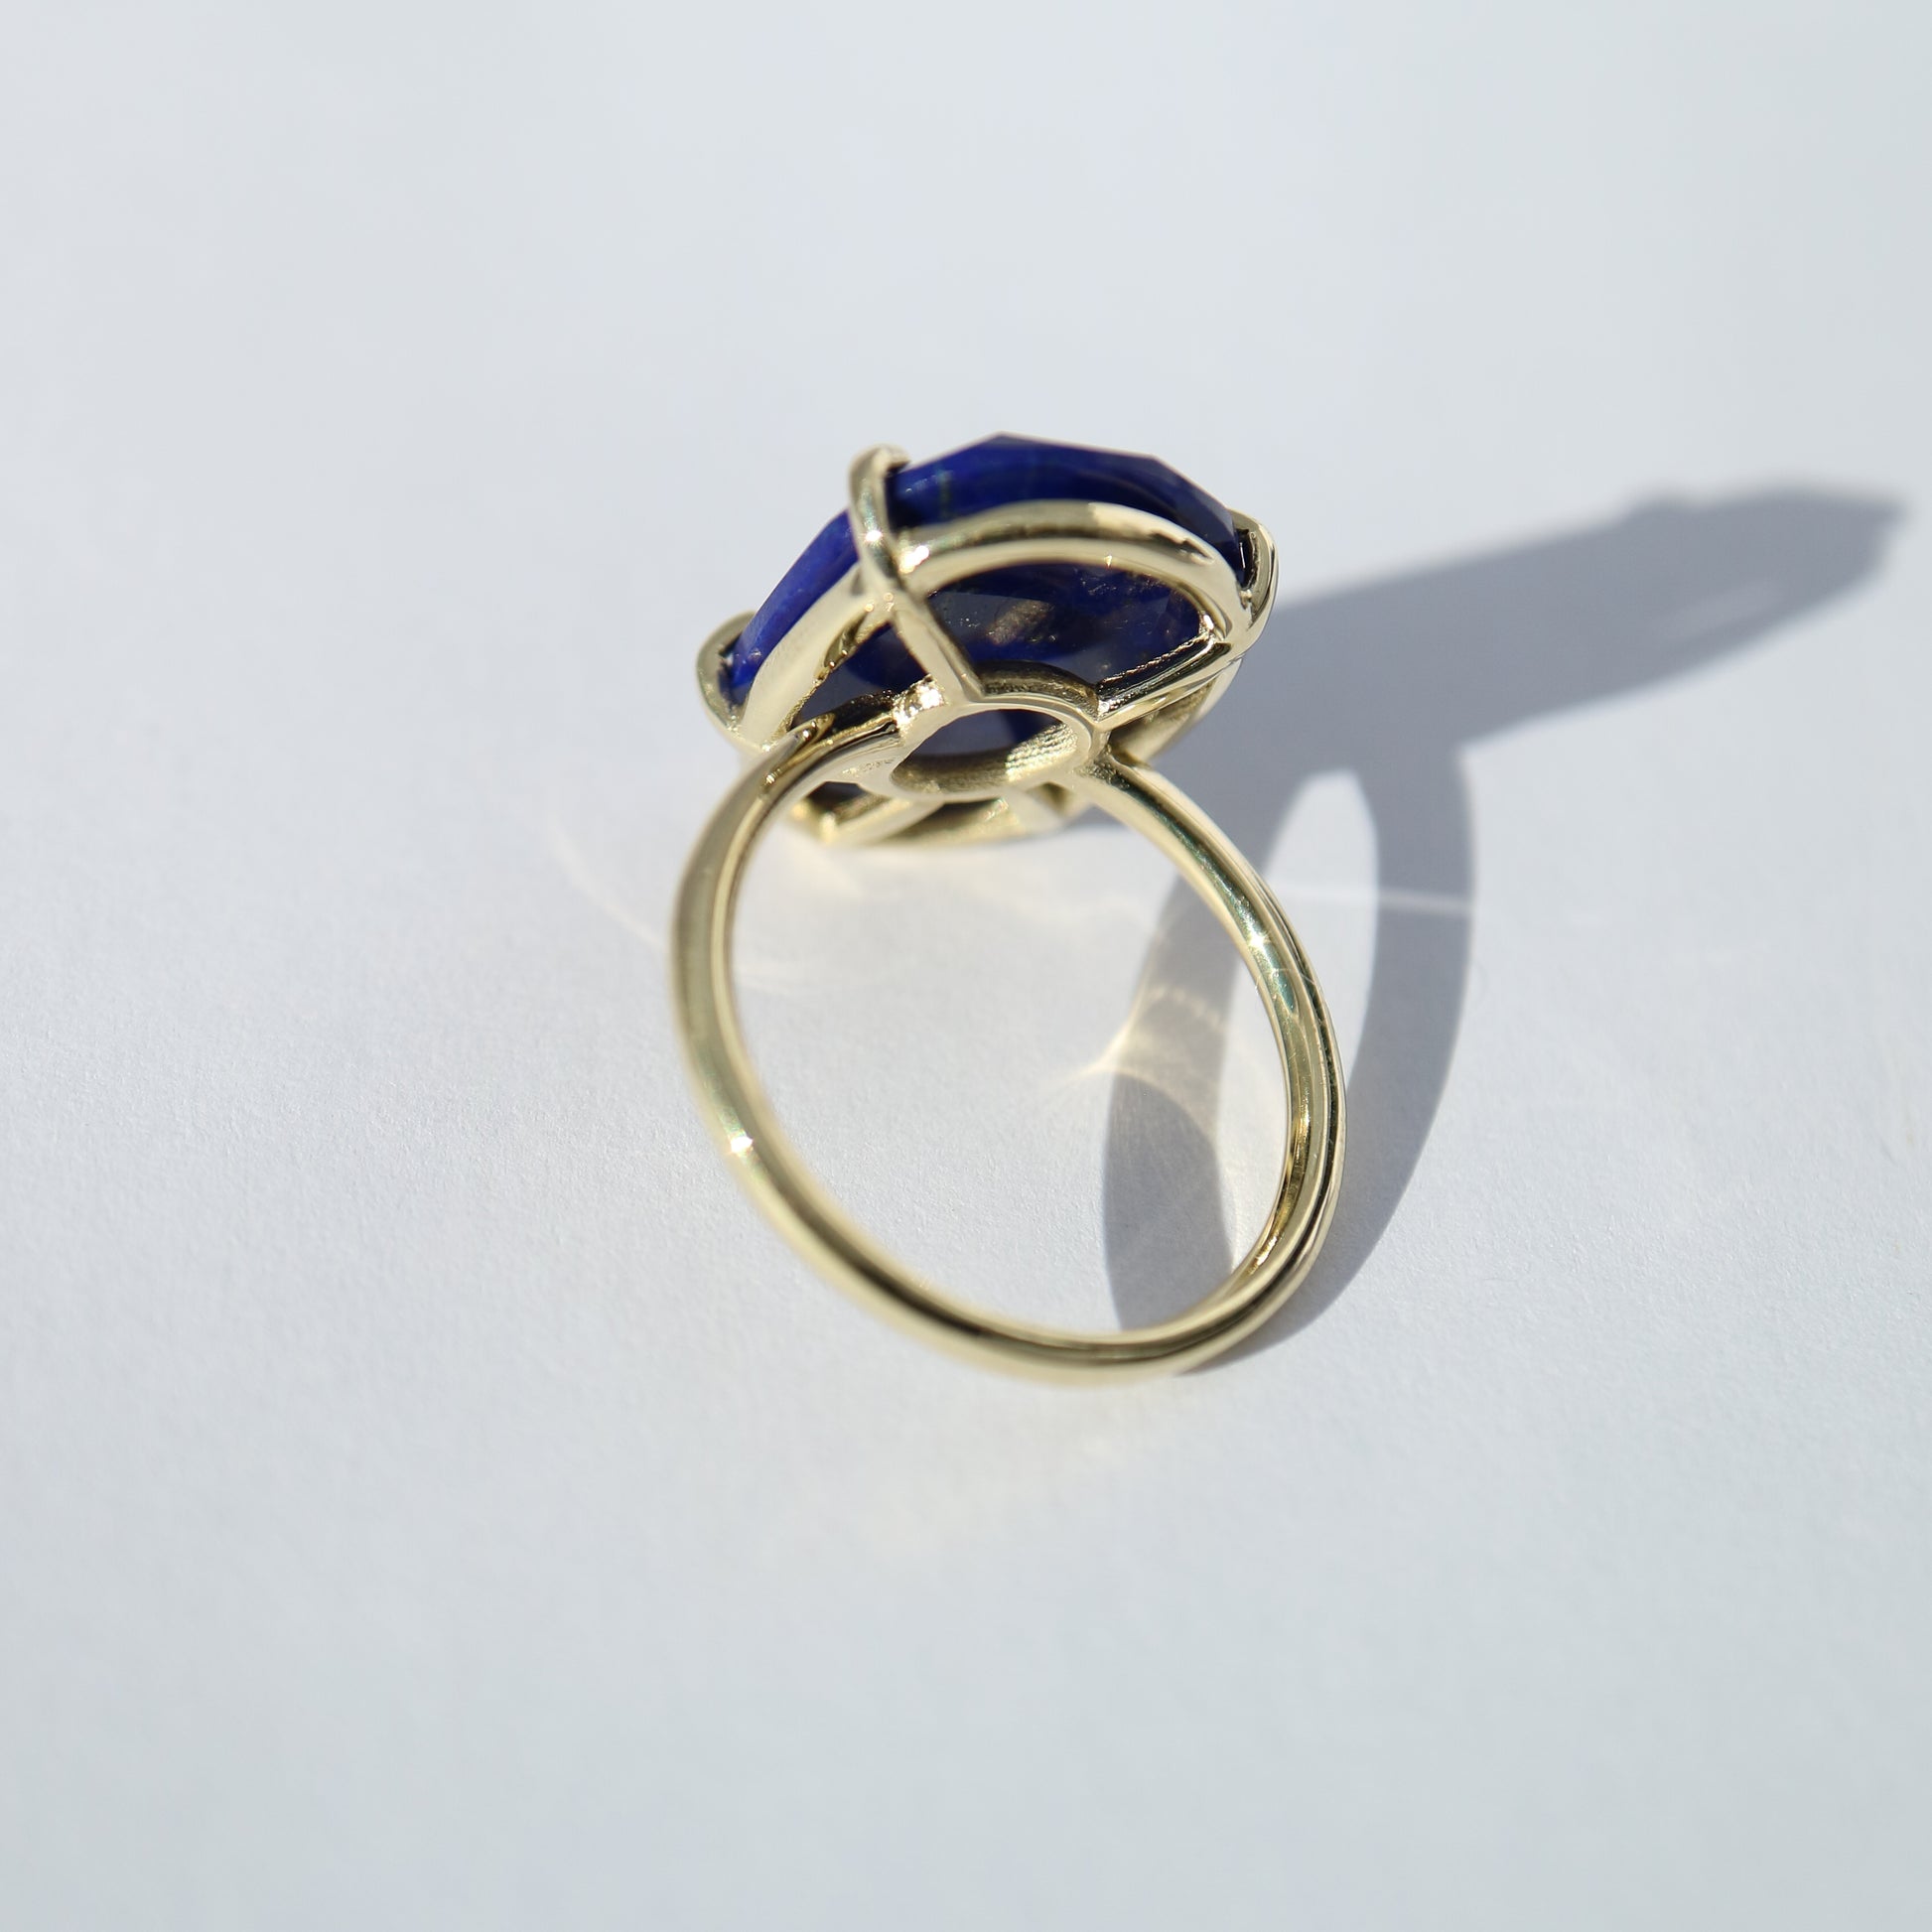 9kt gold Azure Rings with asymmetrical gemstones lapis lazuli, turquoise, chrysoprase